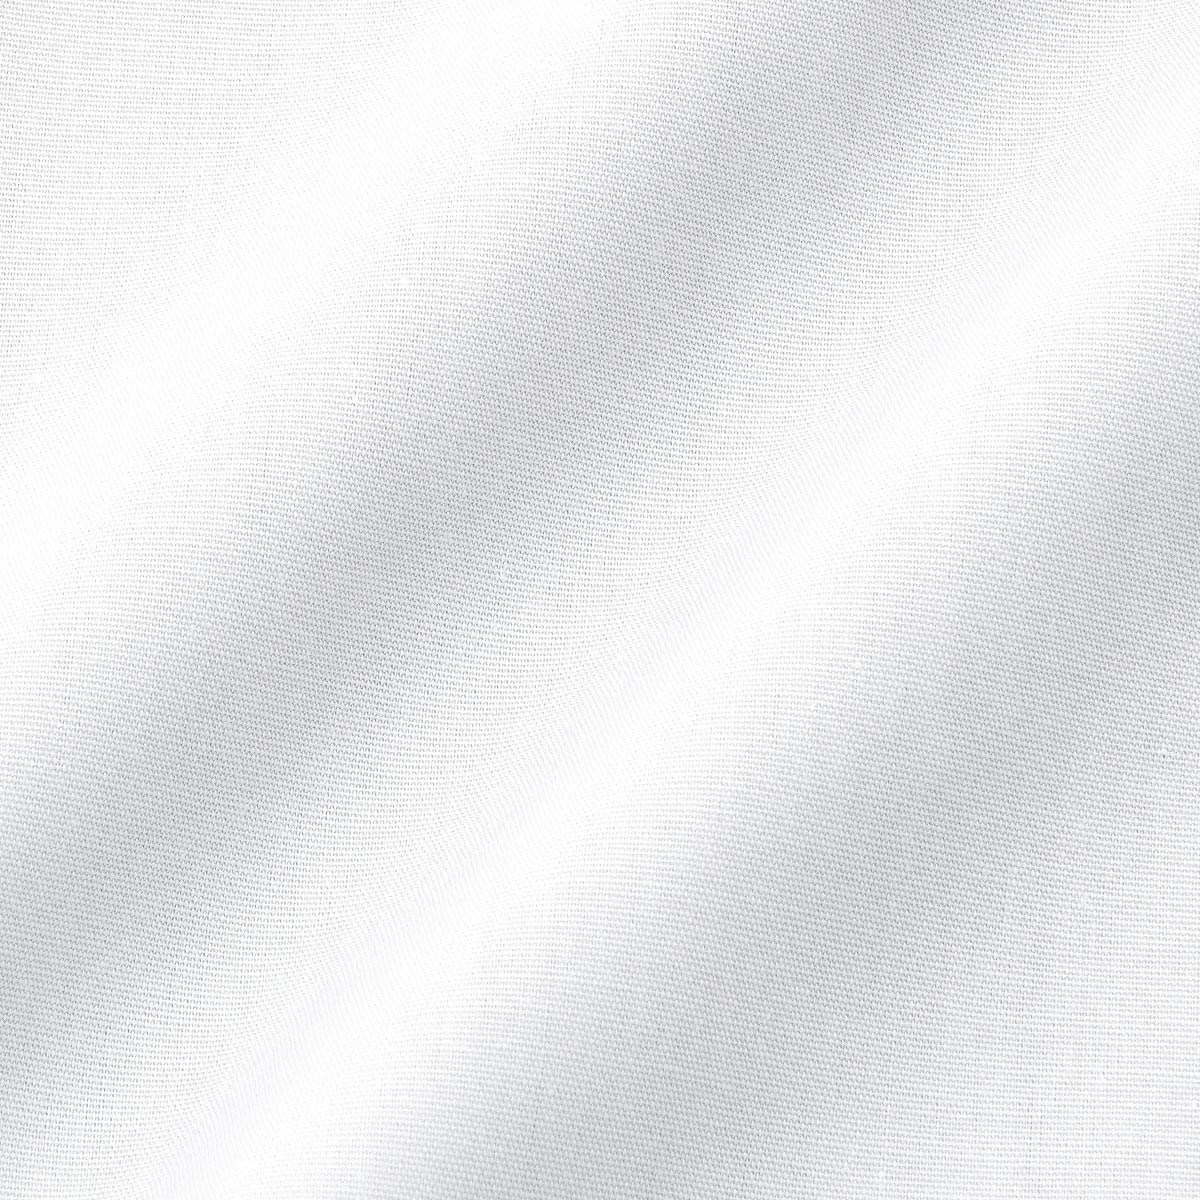 CHOYA SHIRT FACTORY 長袖レギュラーカラー ホワイト ワイシャツ SBTrecommend